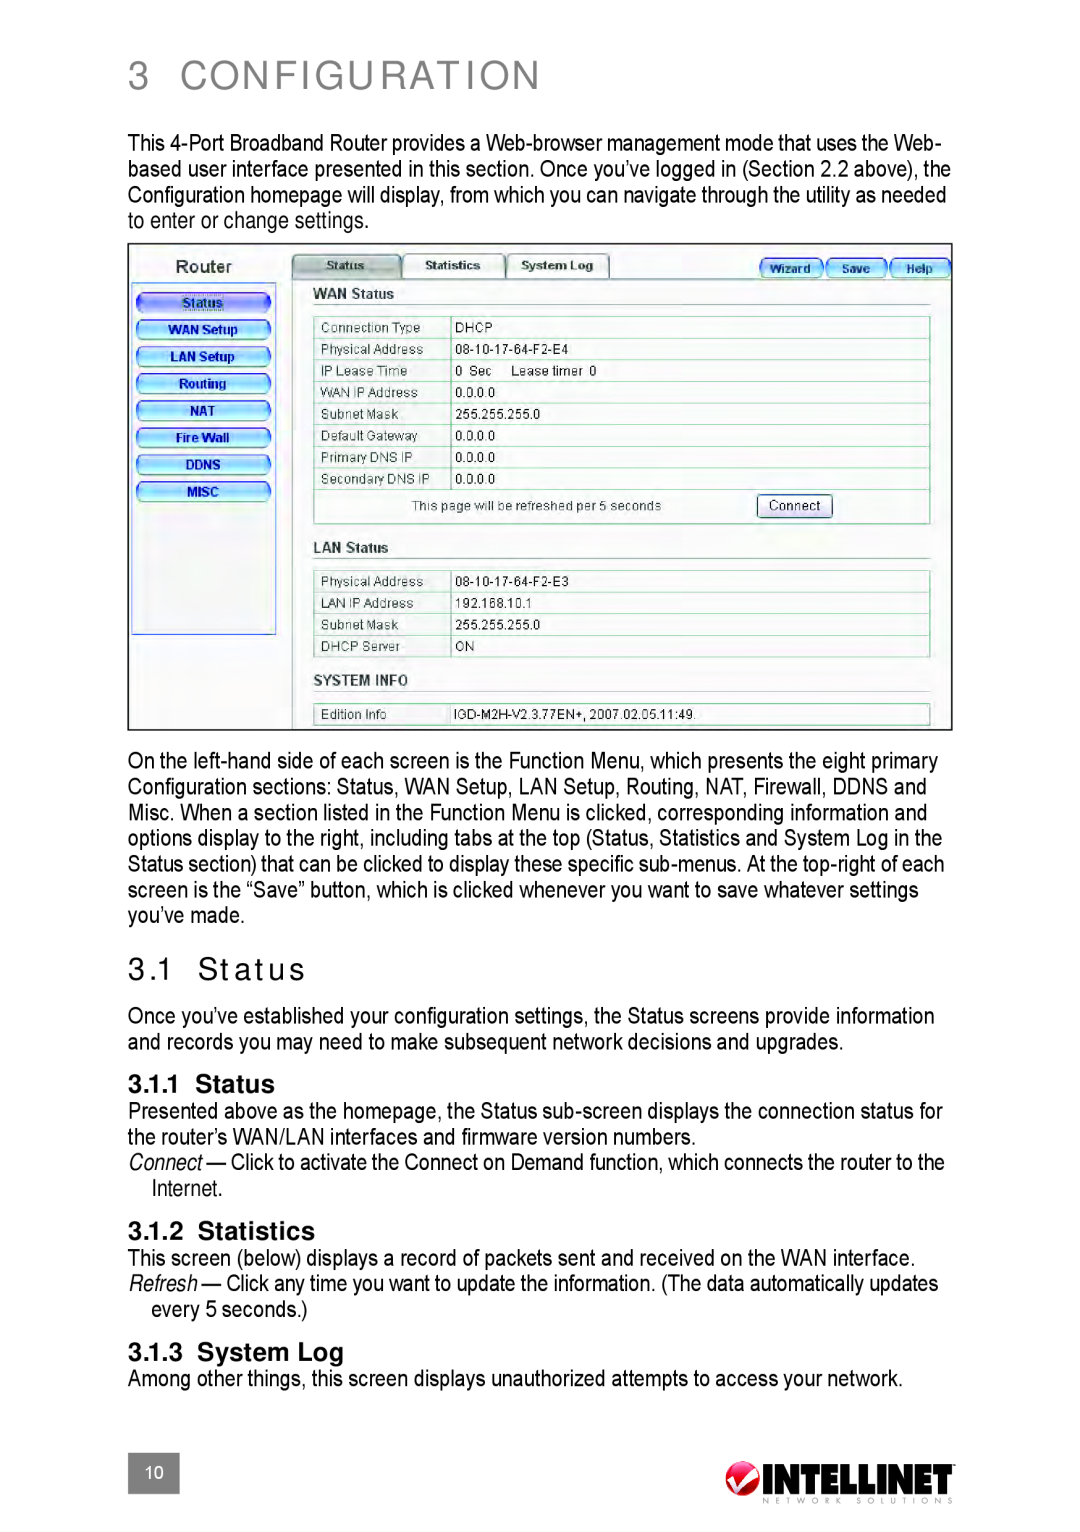 Intellinet Network Solutions 524537 user manual configuration, Status, Statistics, System Log 